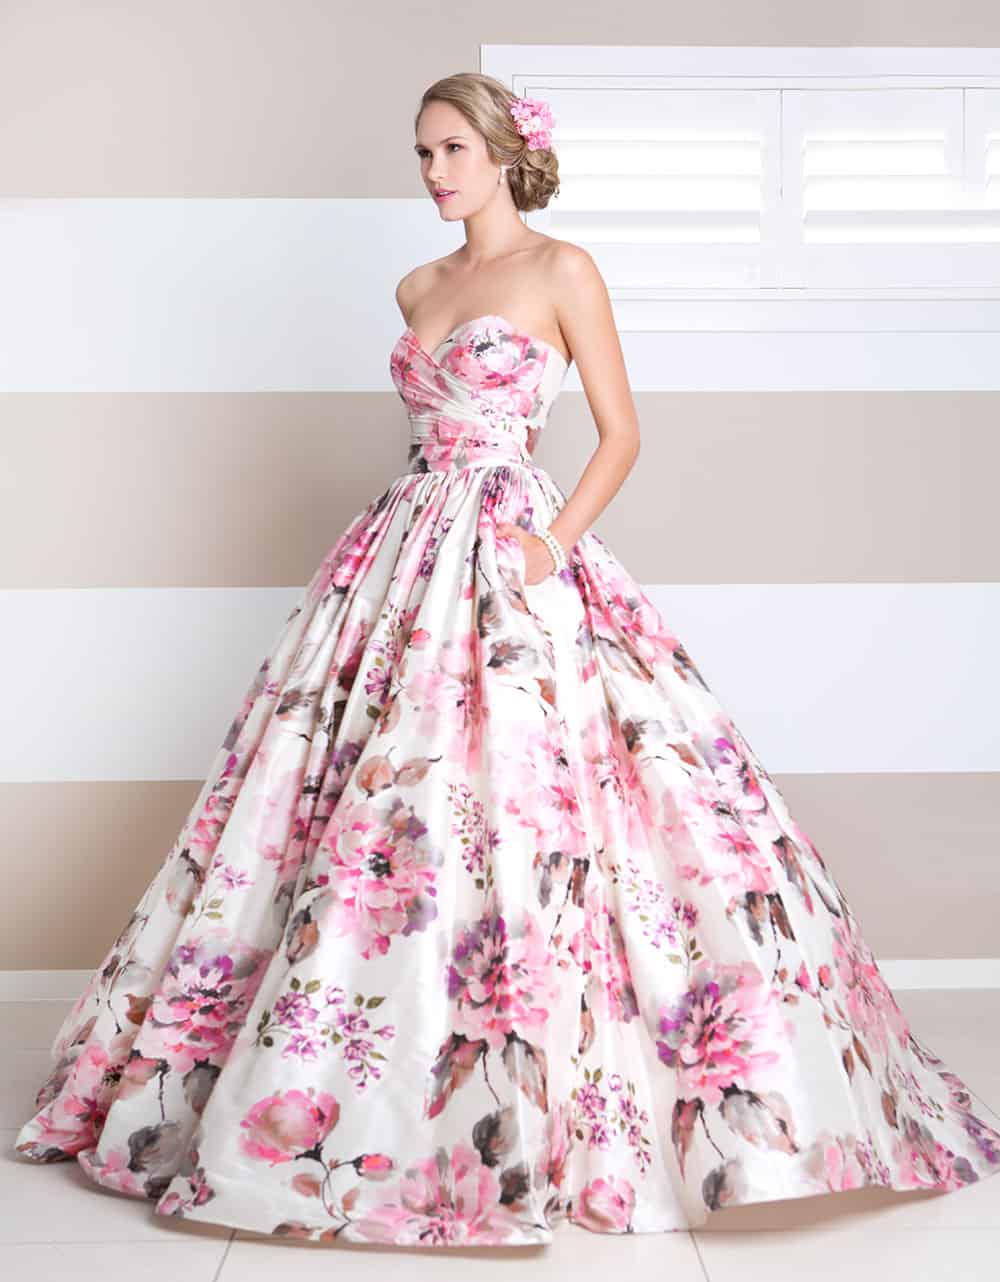 Wendy Makin Bridal Designs floral wedding dress.